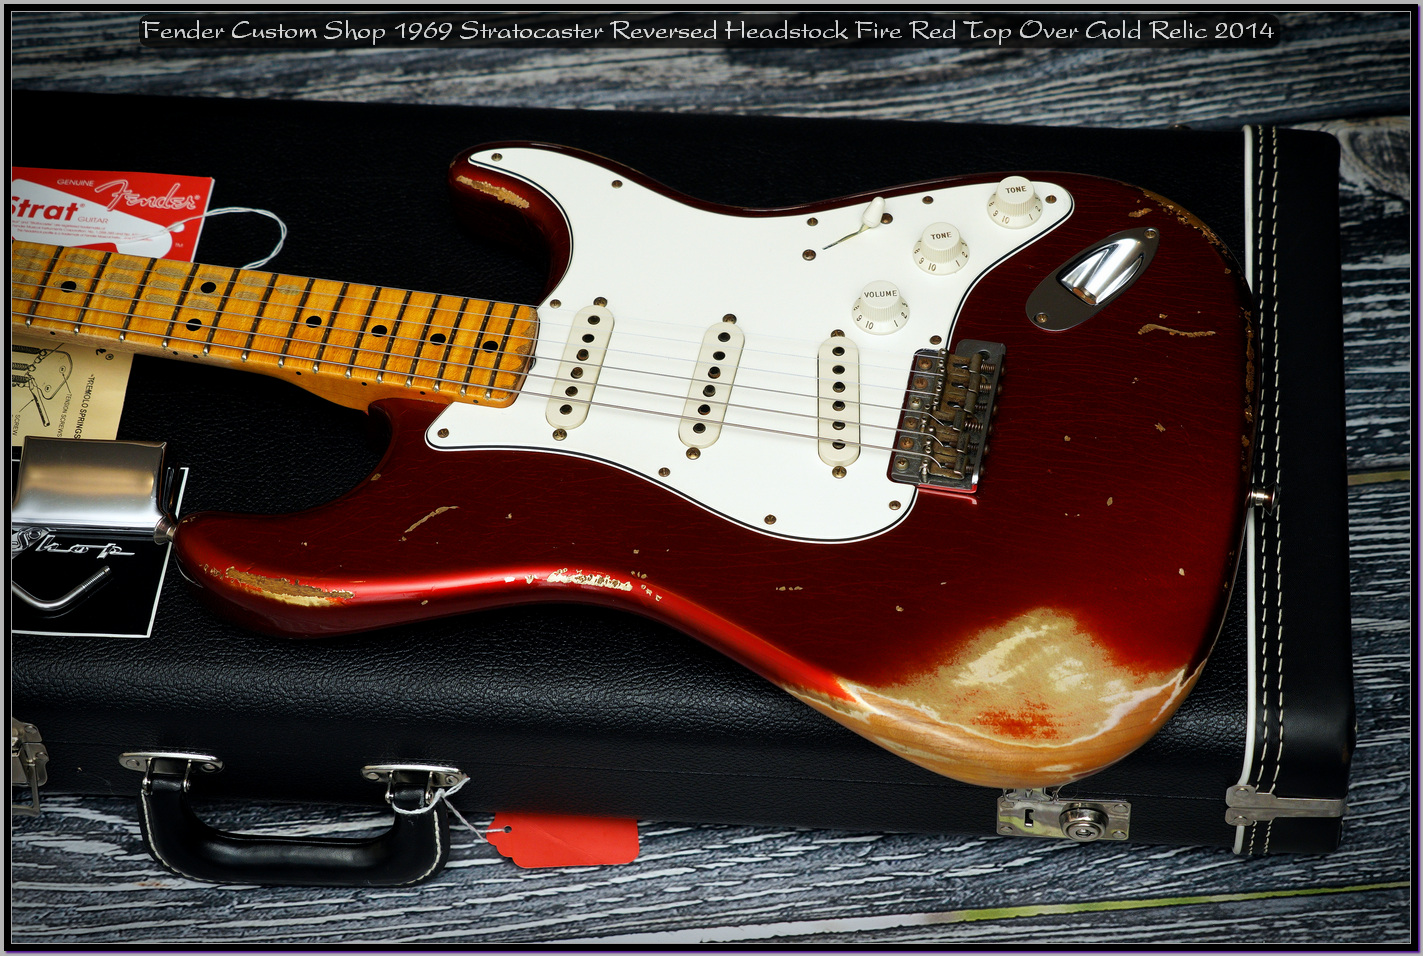 Fender Custom Shop 1969 Stratocaster Reversed Headstock Fire Red Top Over Gold Relic 2014 03_x1440.jpg